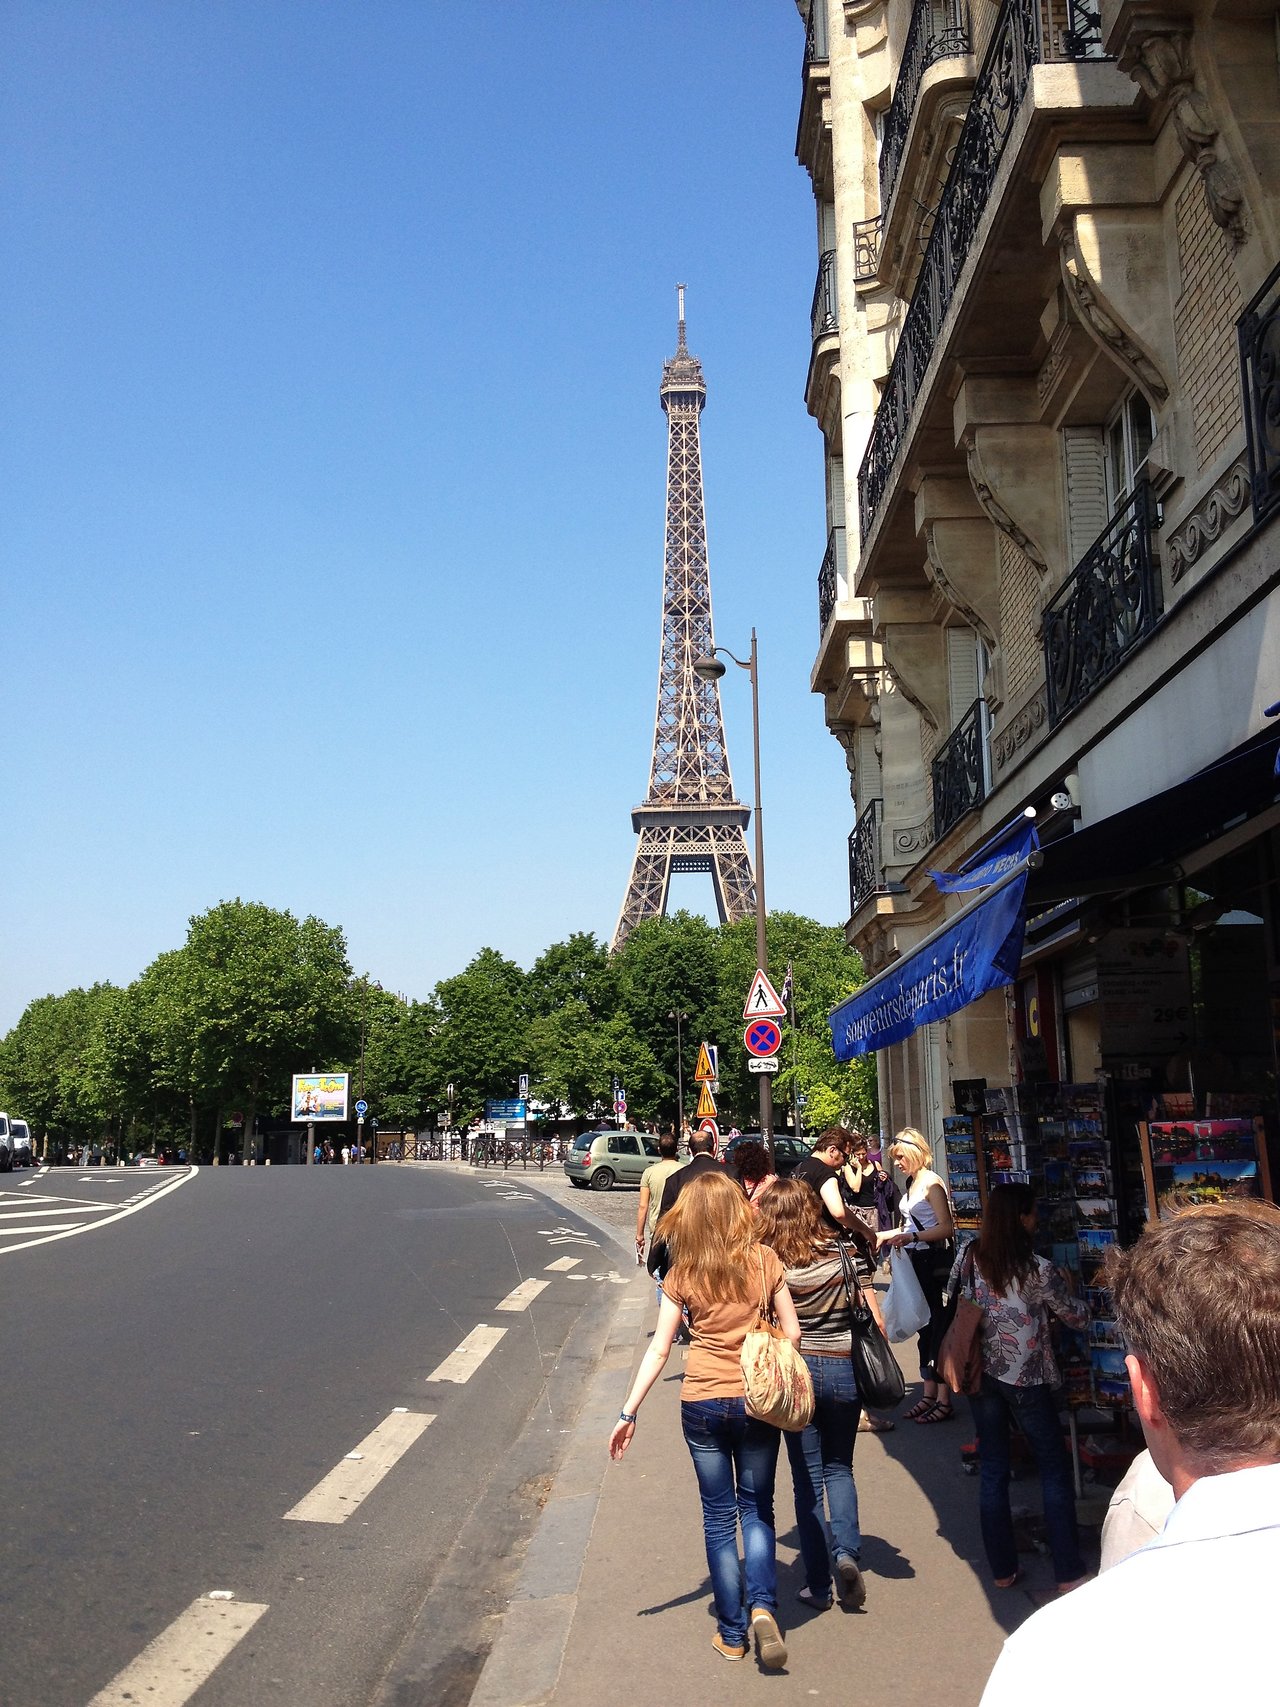 Eifel tower by day